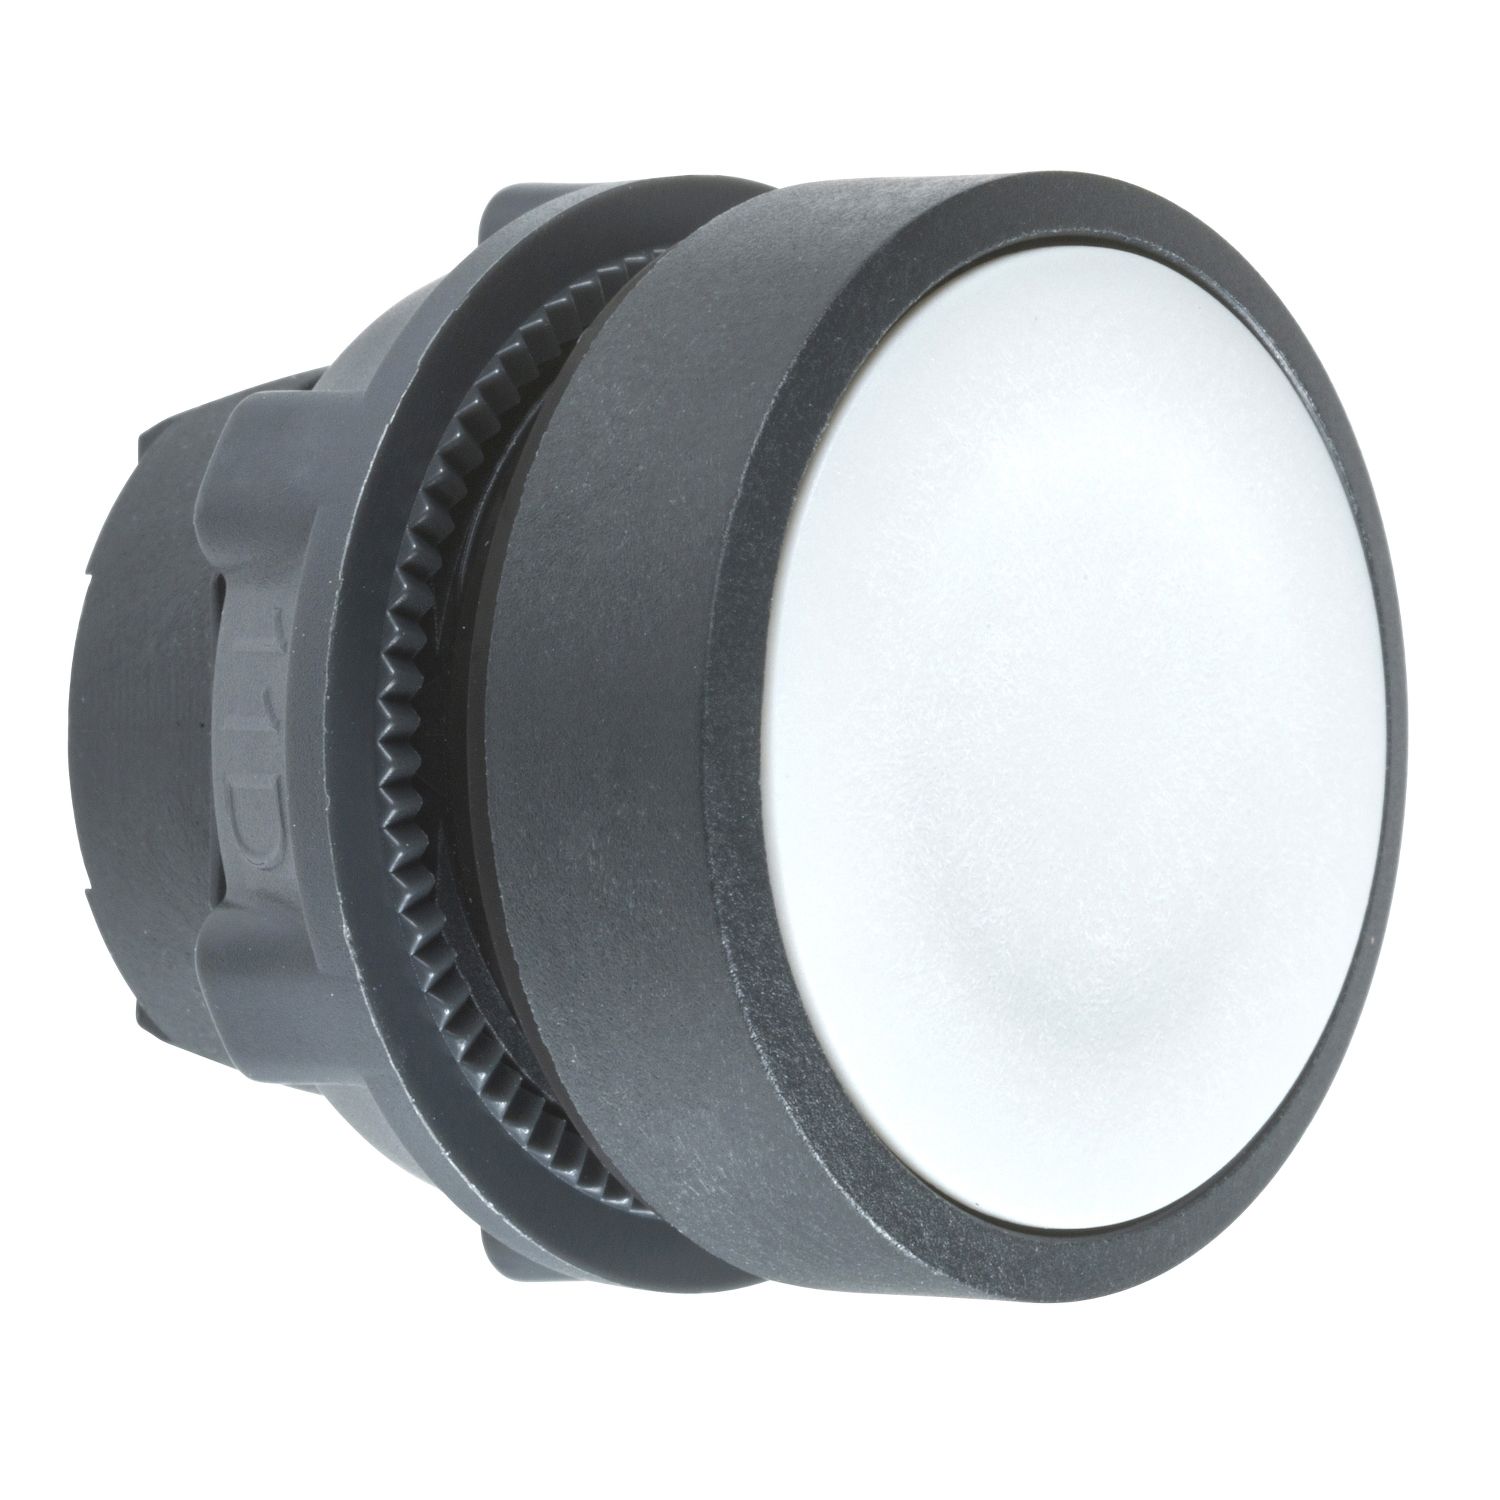 ZB5AA8 Head for non illuminated push button, Harmony XB5, XB4, grey flush pushbutton Ø22 mm spring return unmarked